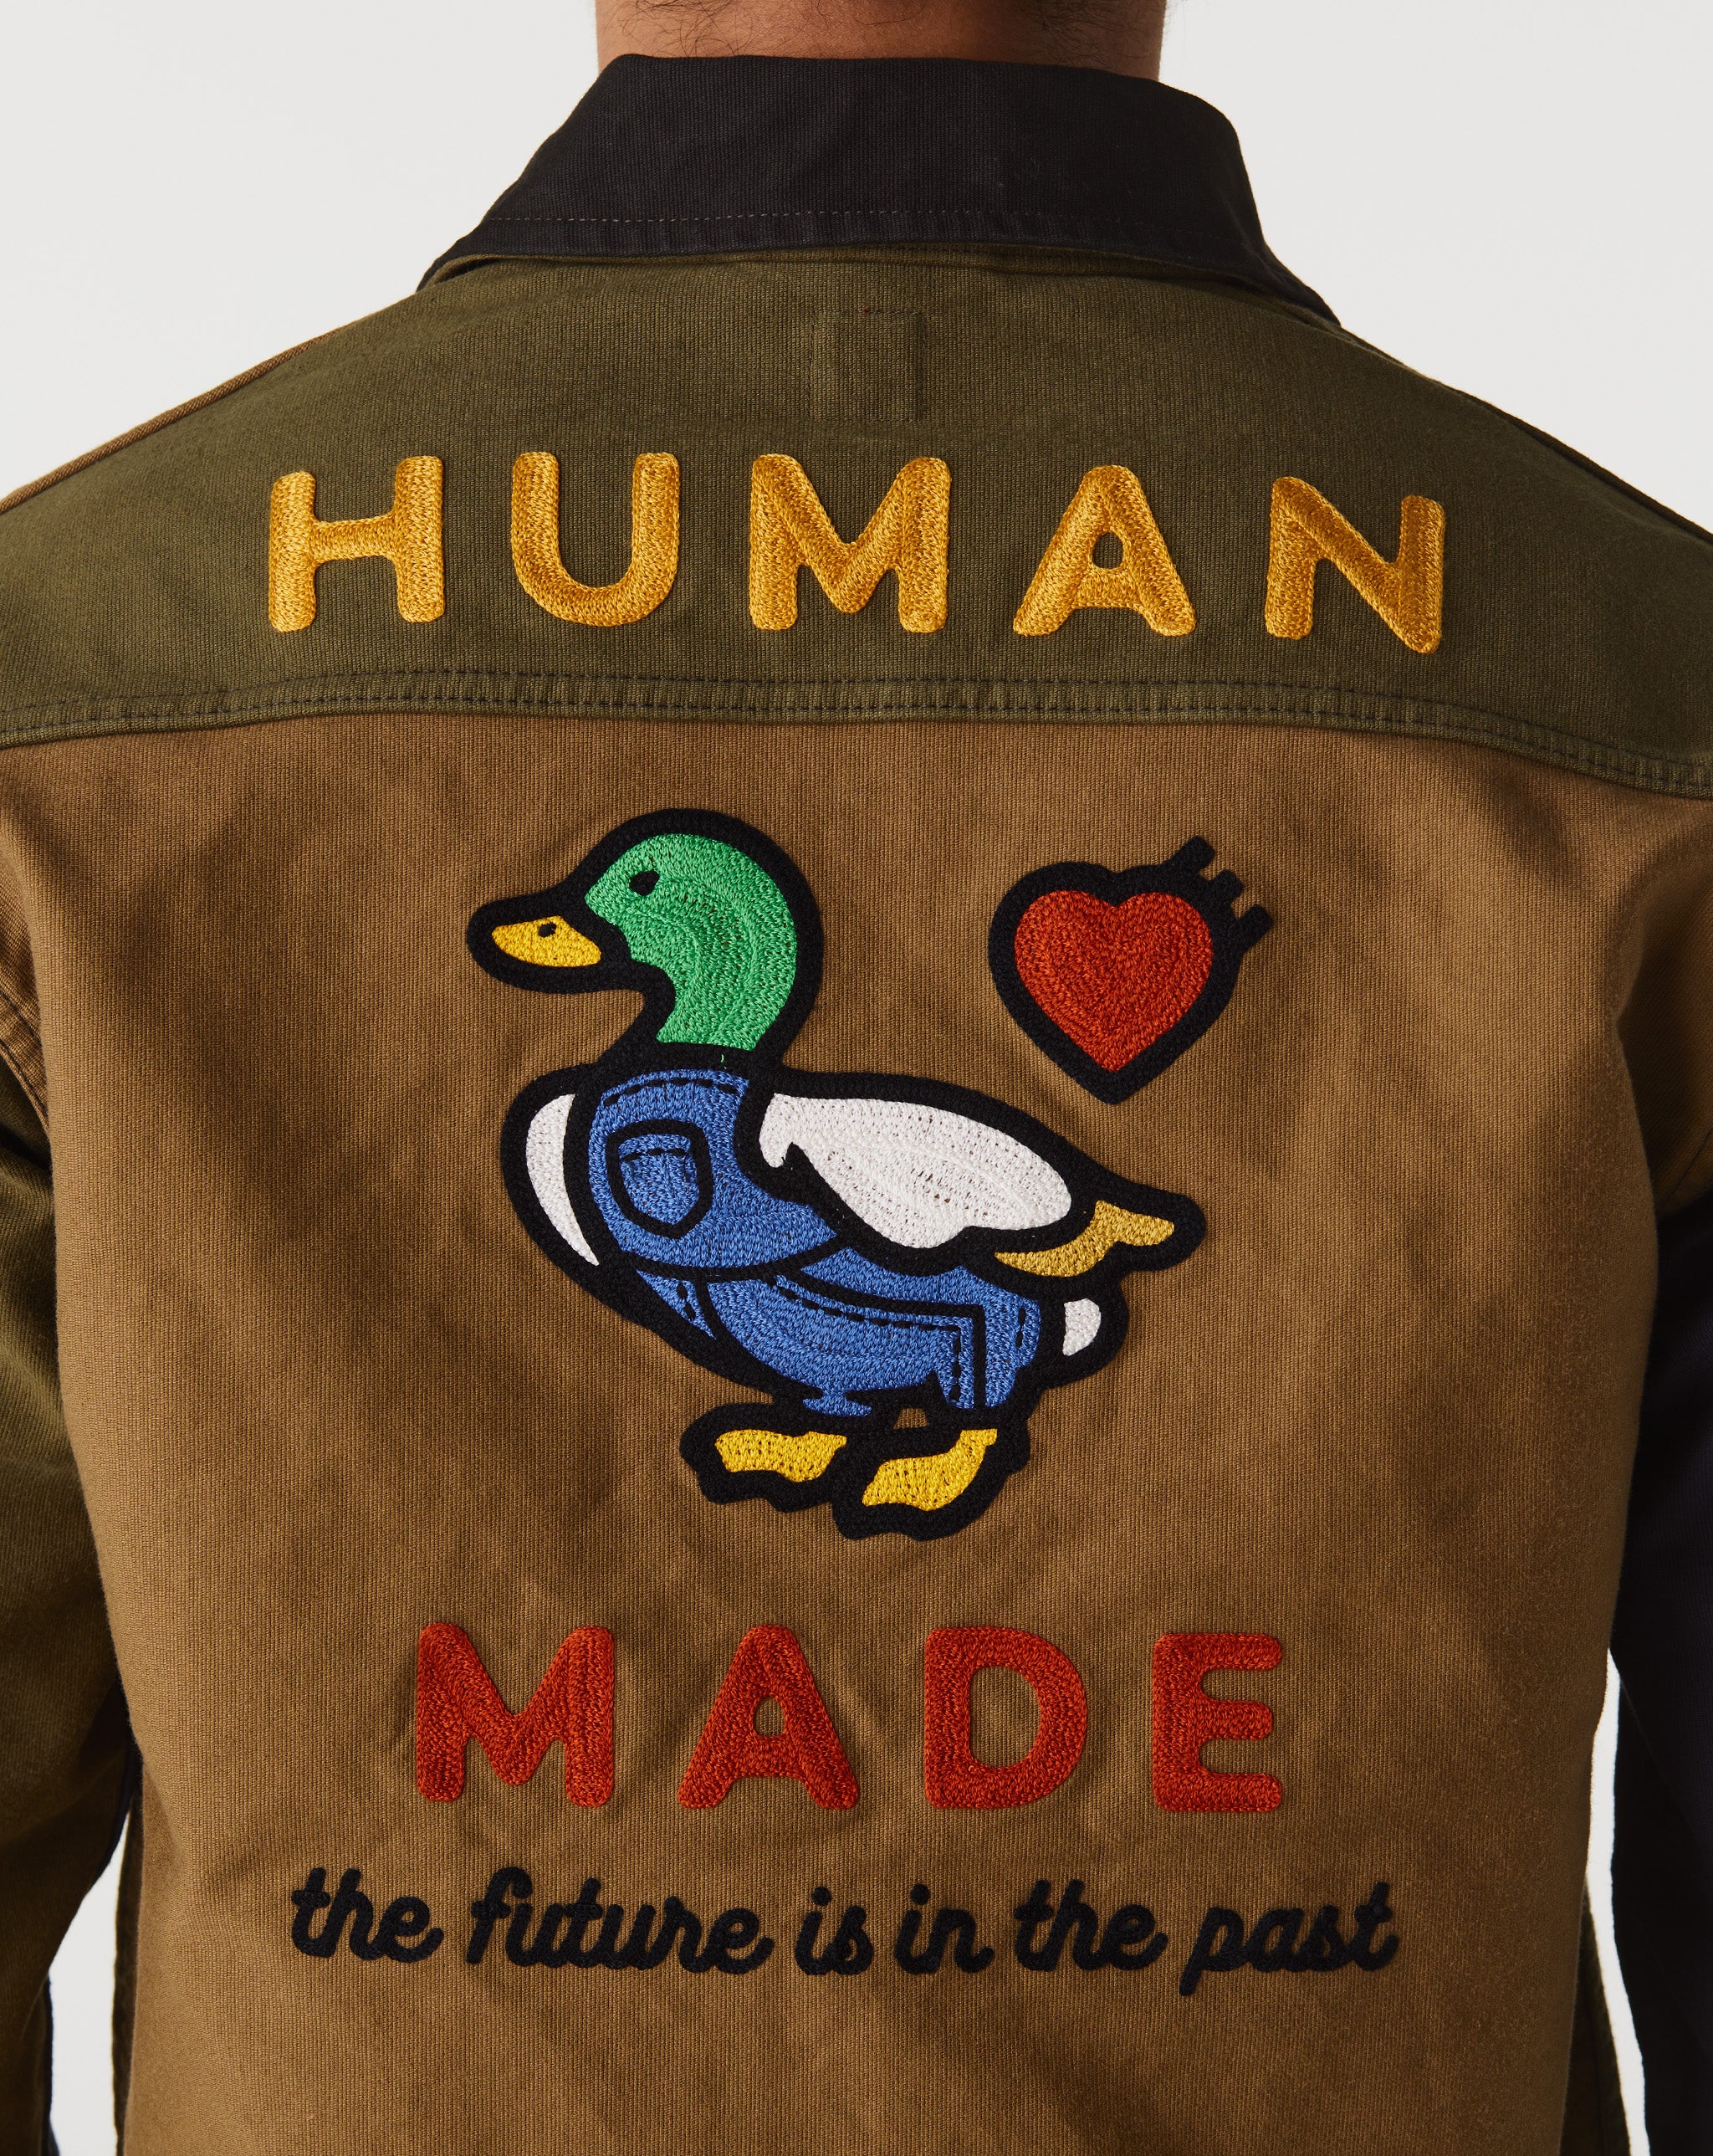 Human Made Zip-Up Work Jacket  - XHIBITION